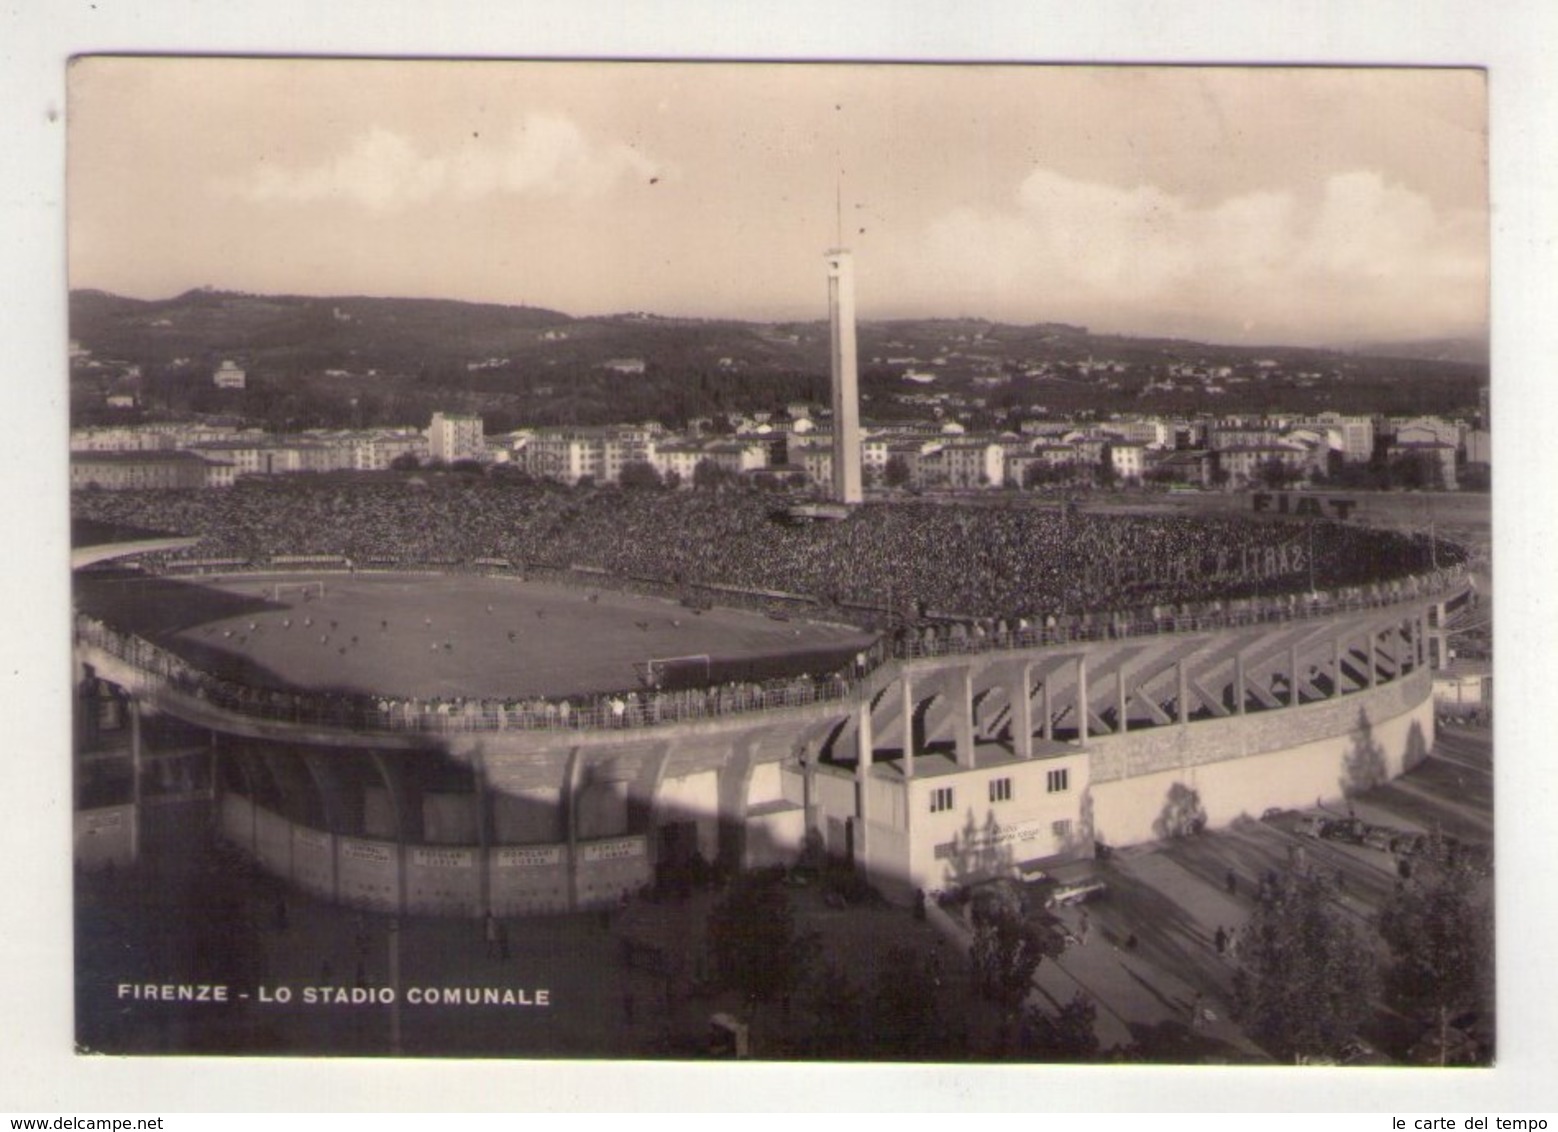 Cartolina Firenze - Lo Stadio Comunale. 1961 - Firenze (Florence)